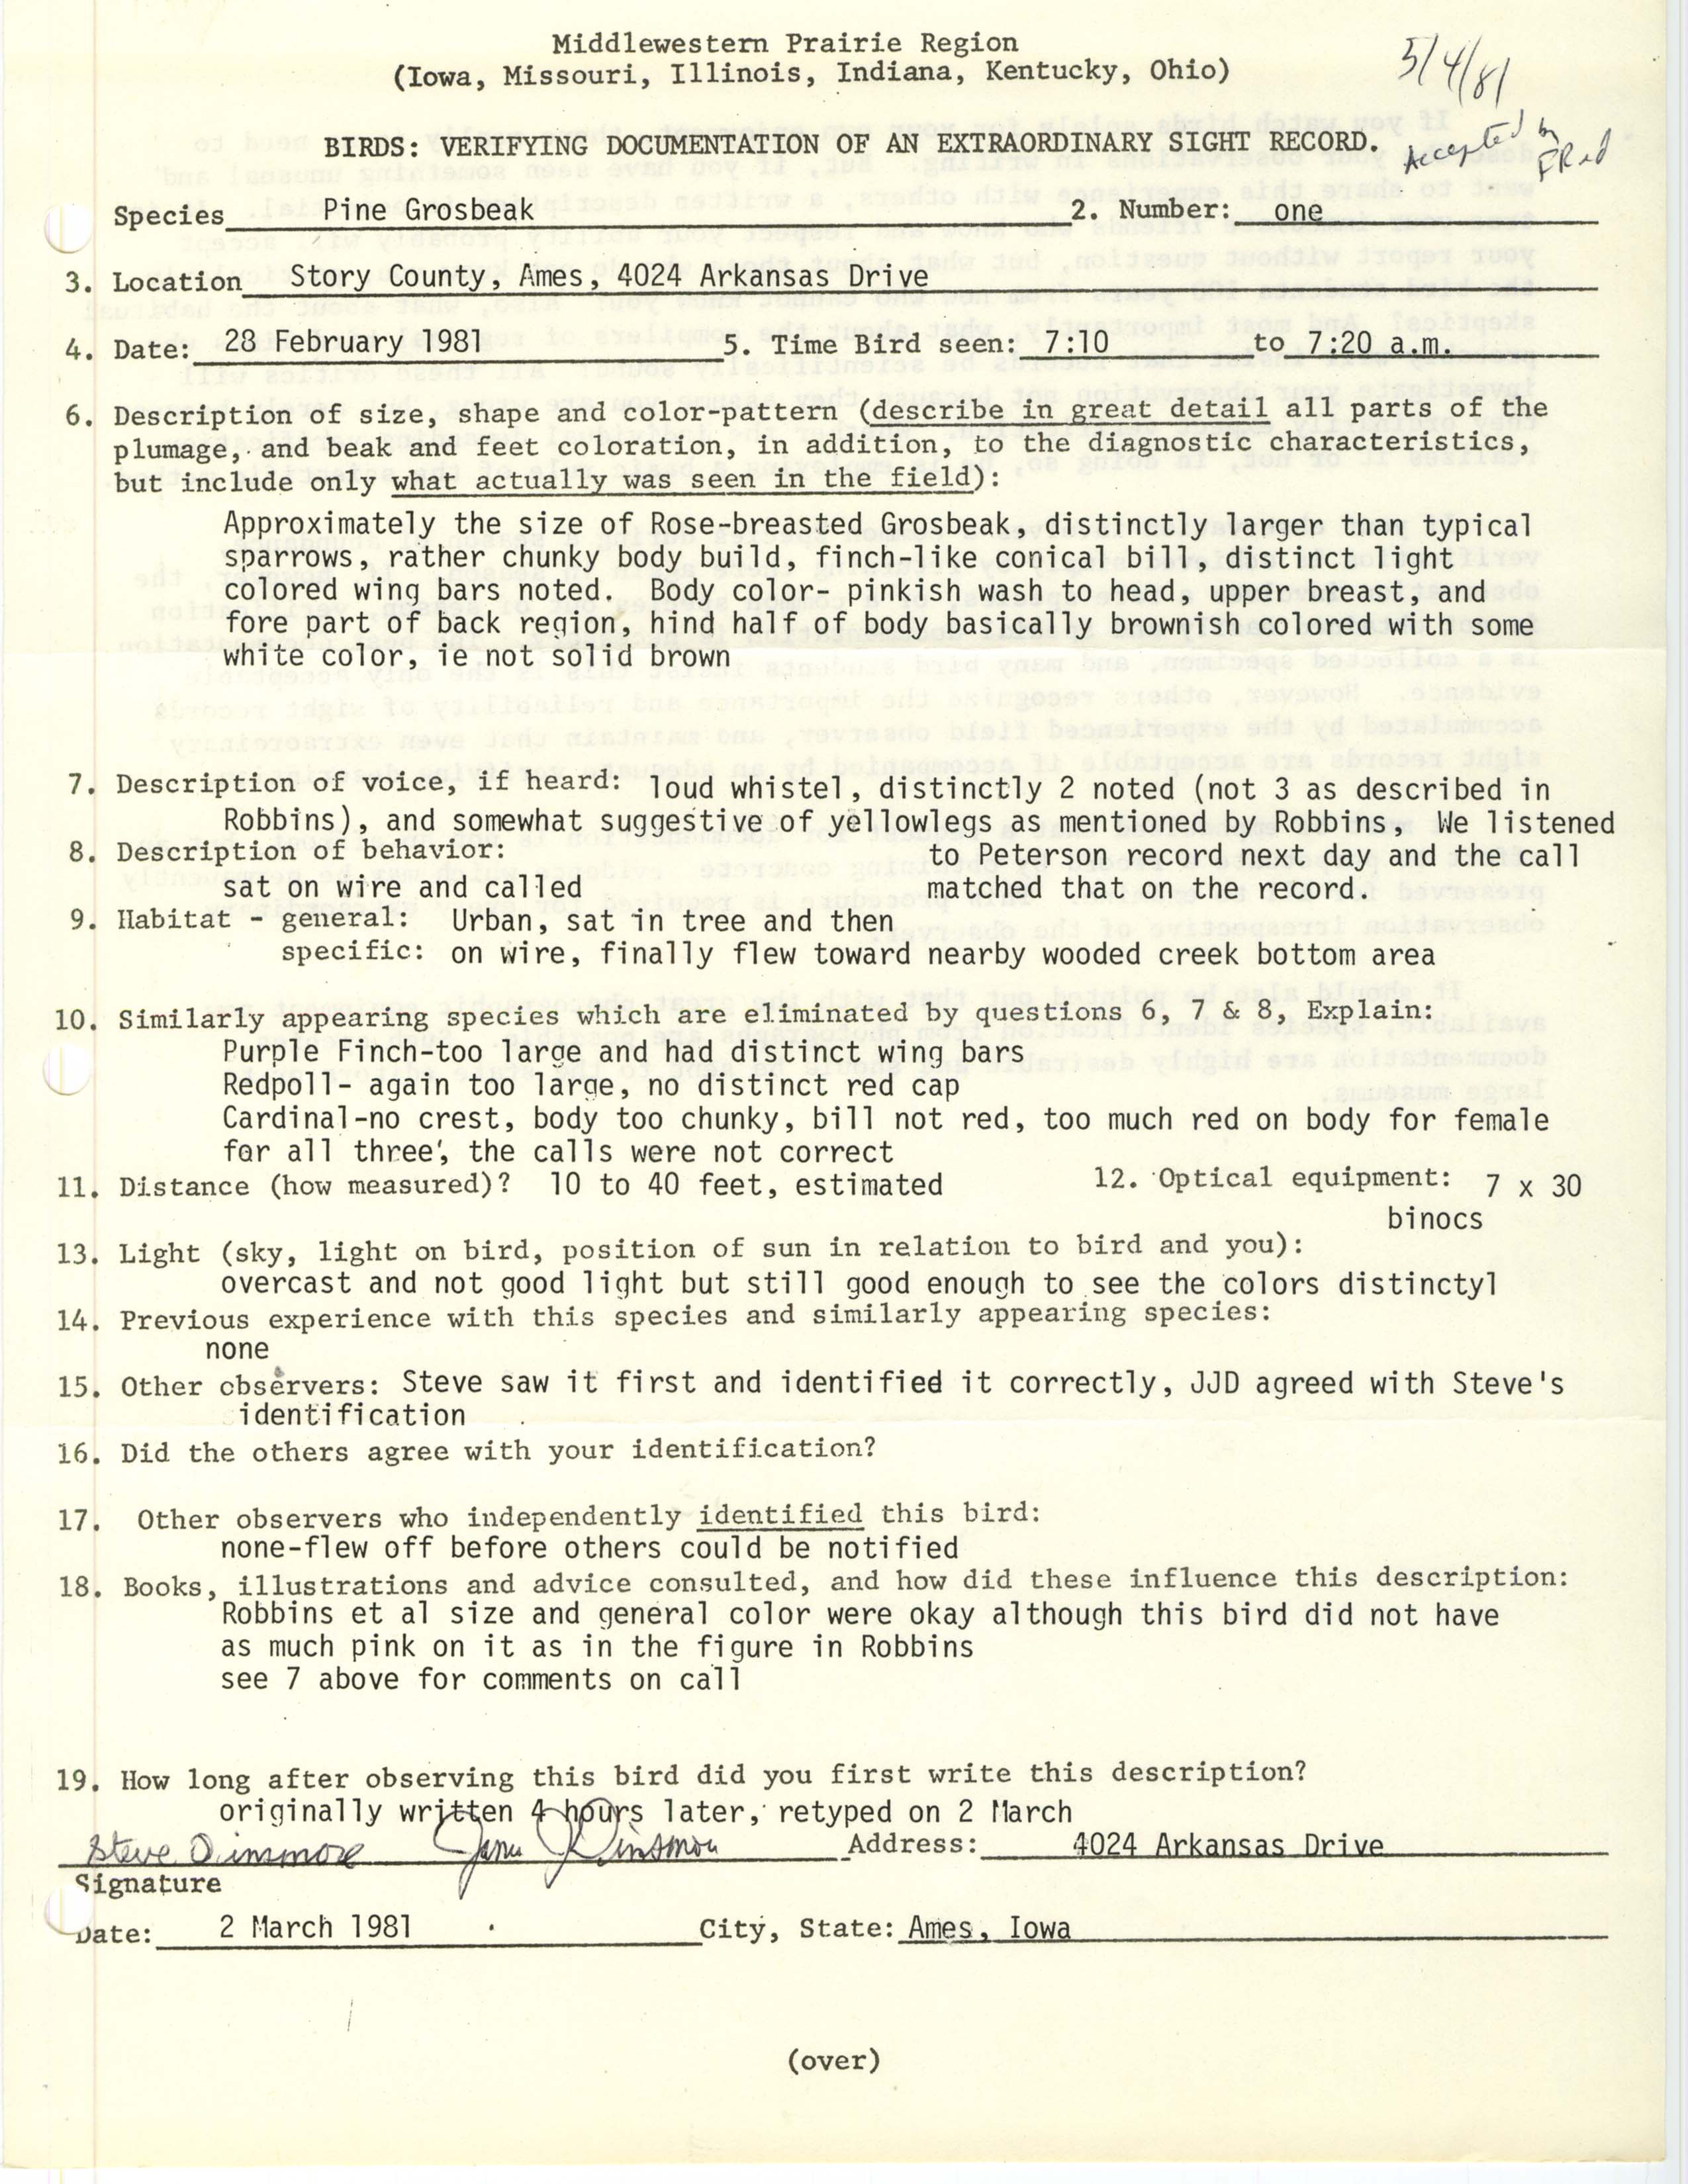 Rare bird documentation form for Pine Grosbeak at Ames, 1981